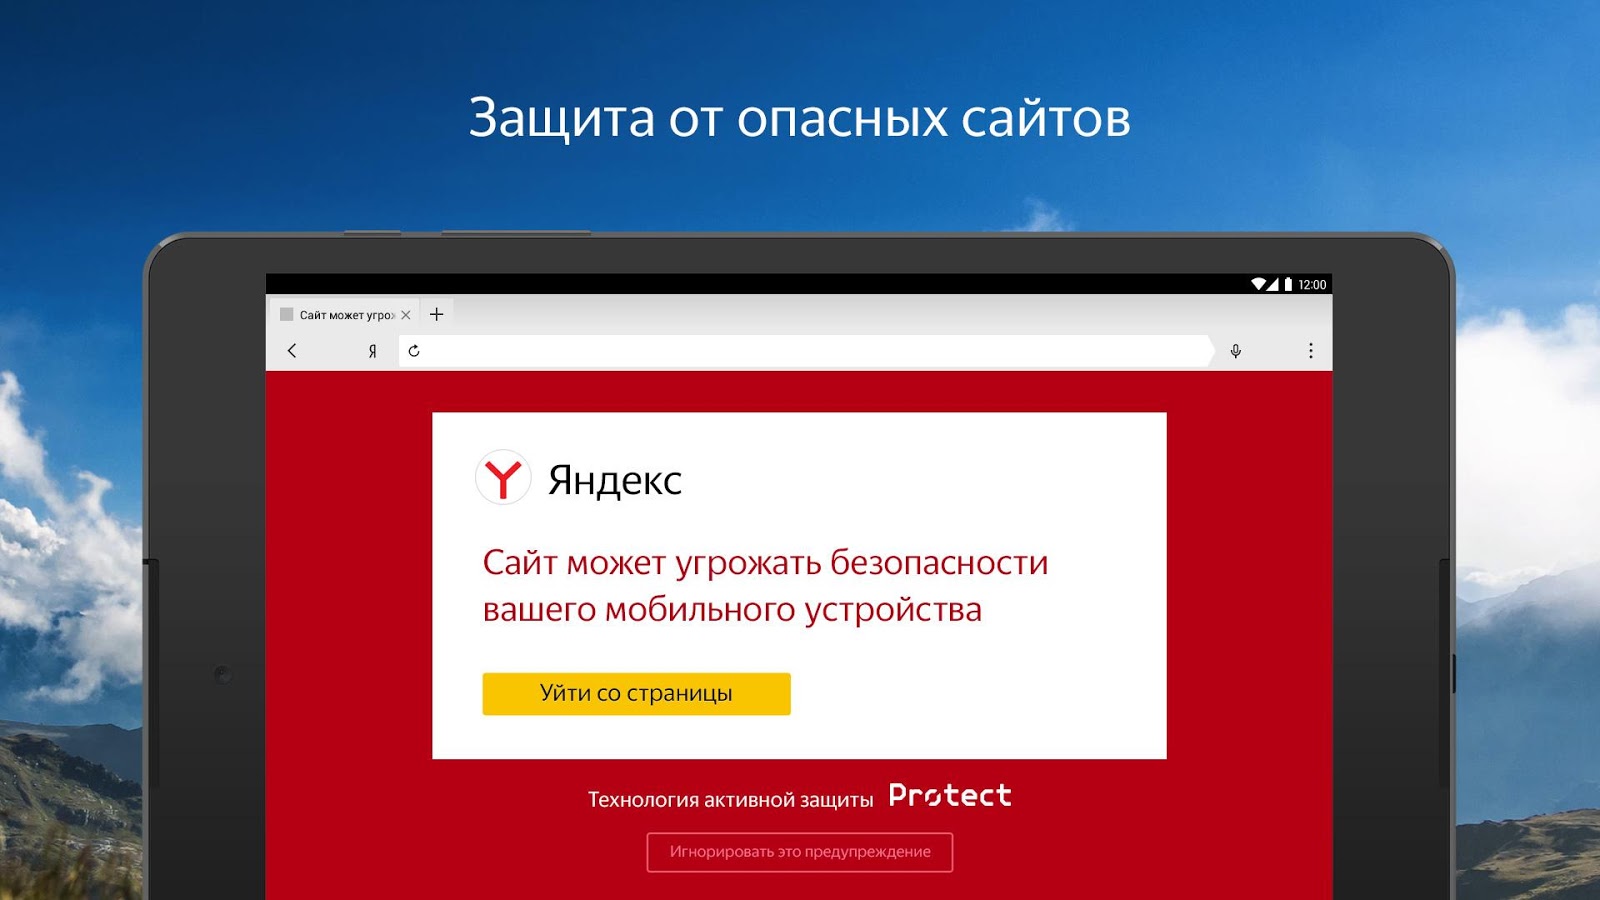 [Решено]Установка и настройка Яндекс Браузера. Не воспроизводится видео в браузере.